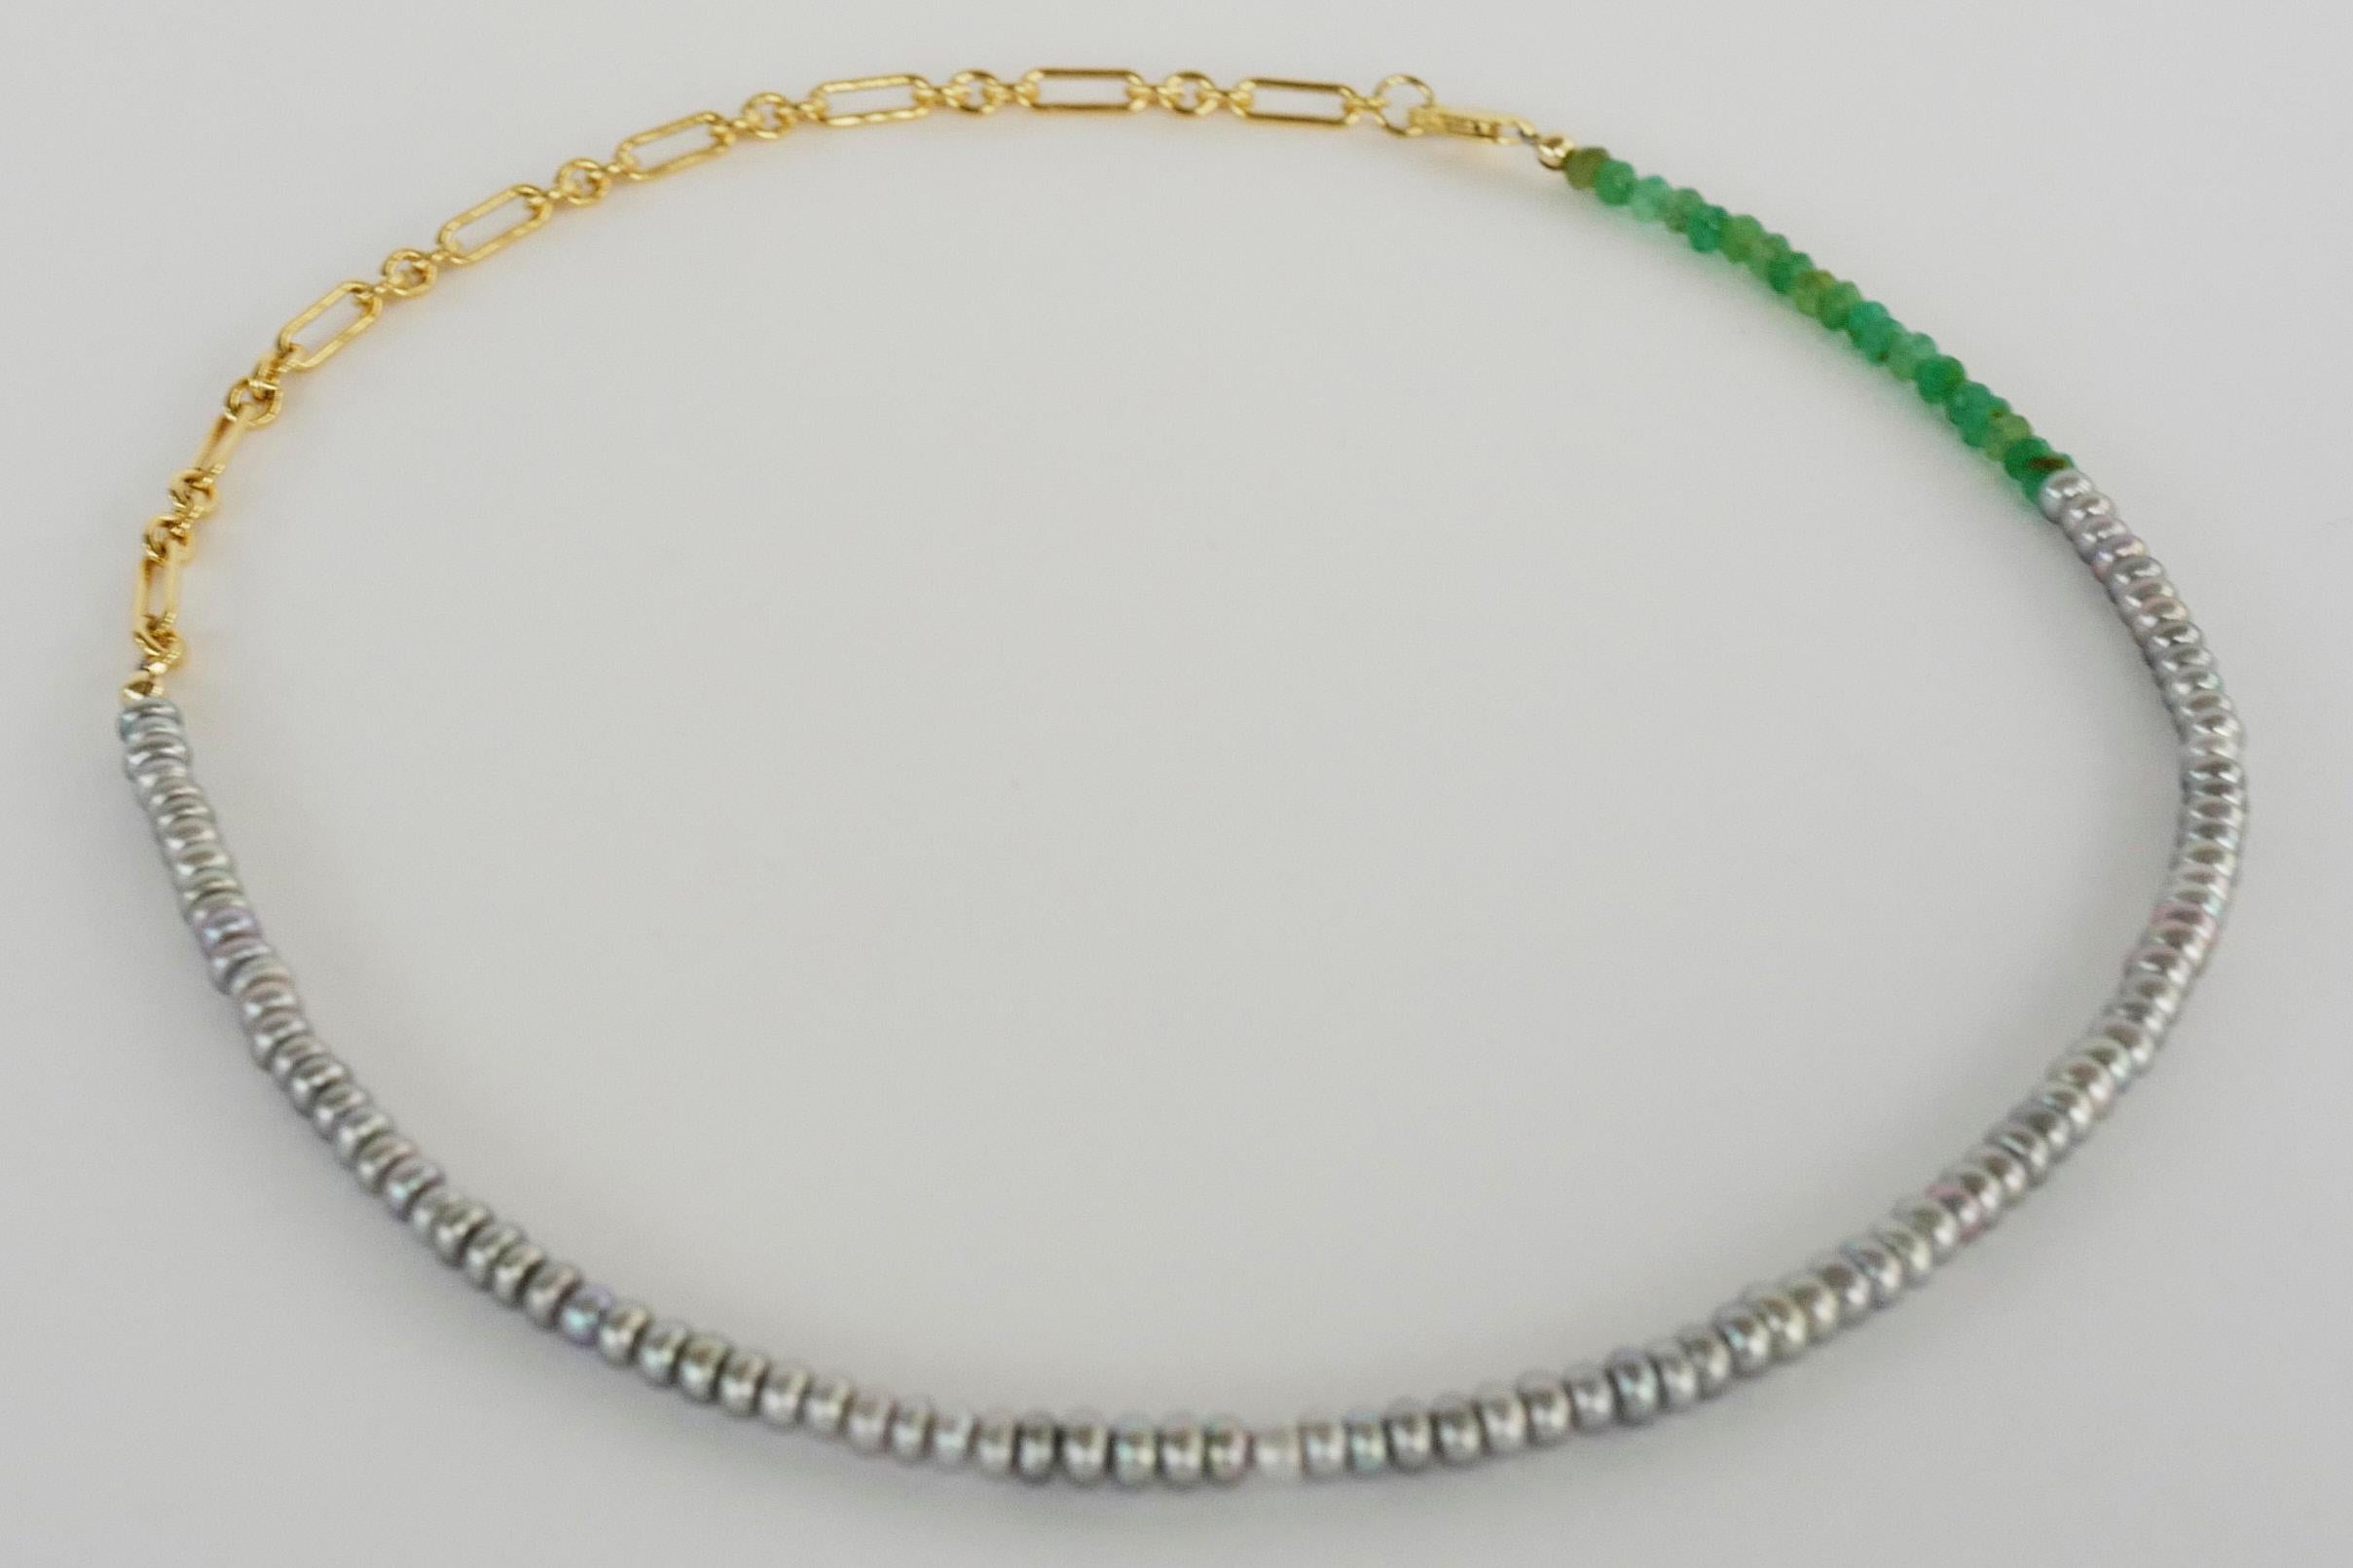 Pearl Bead Necklace Choker Chain Chrysoprase J Dauphin

